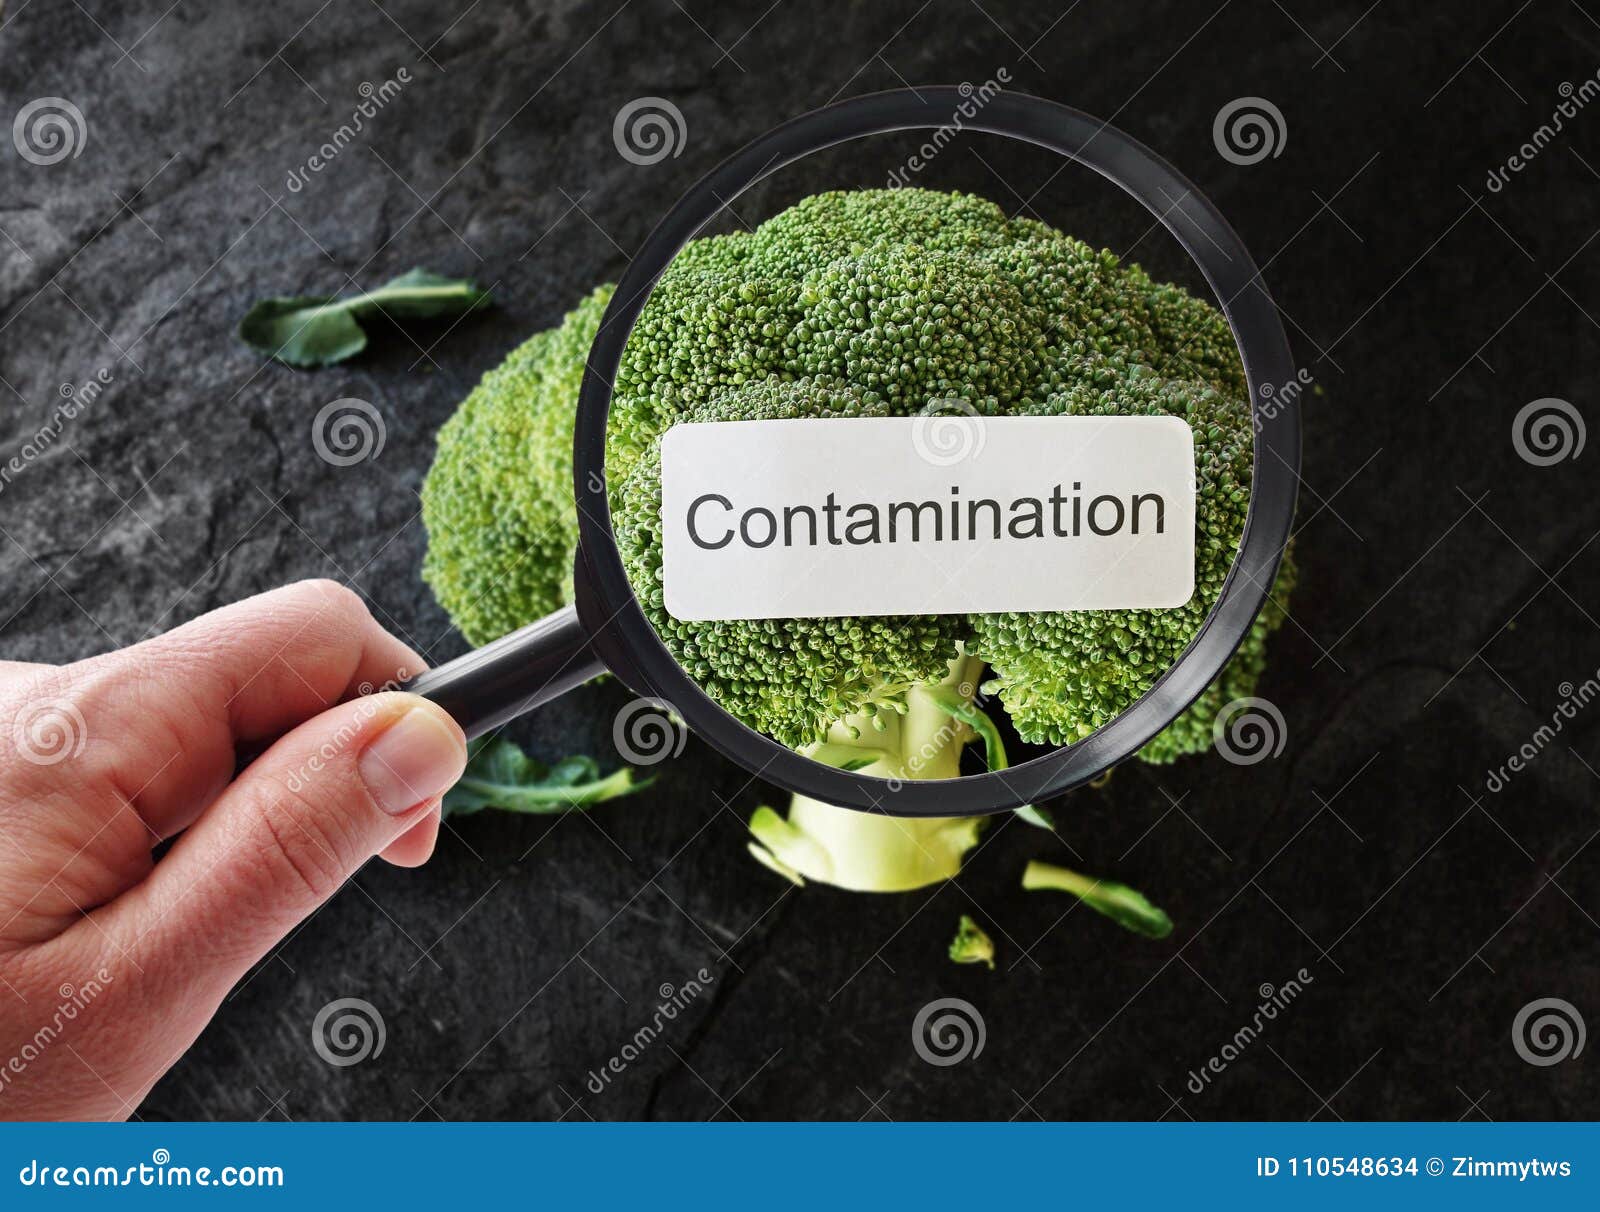 detecting food contamination